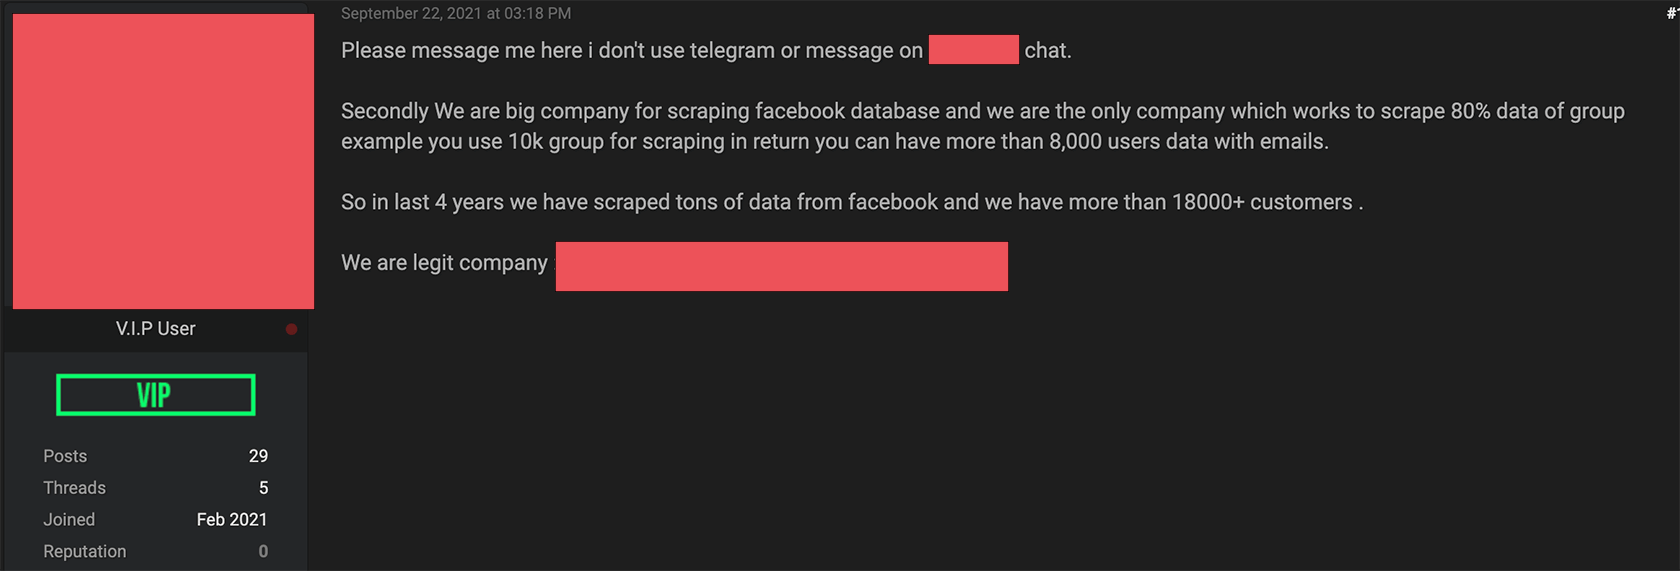 Persönliche Facebook-Daten verkauft